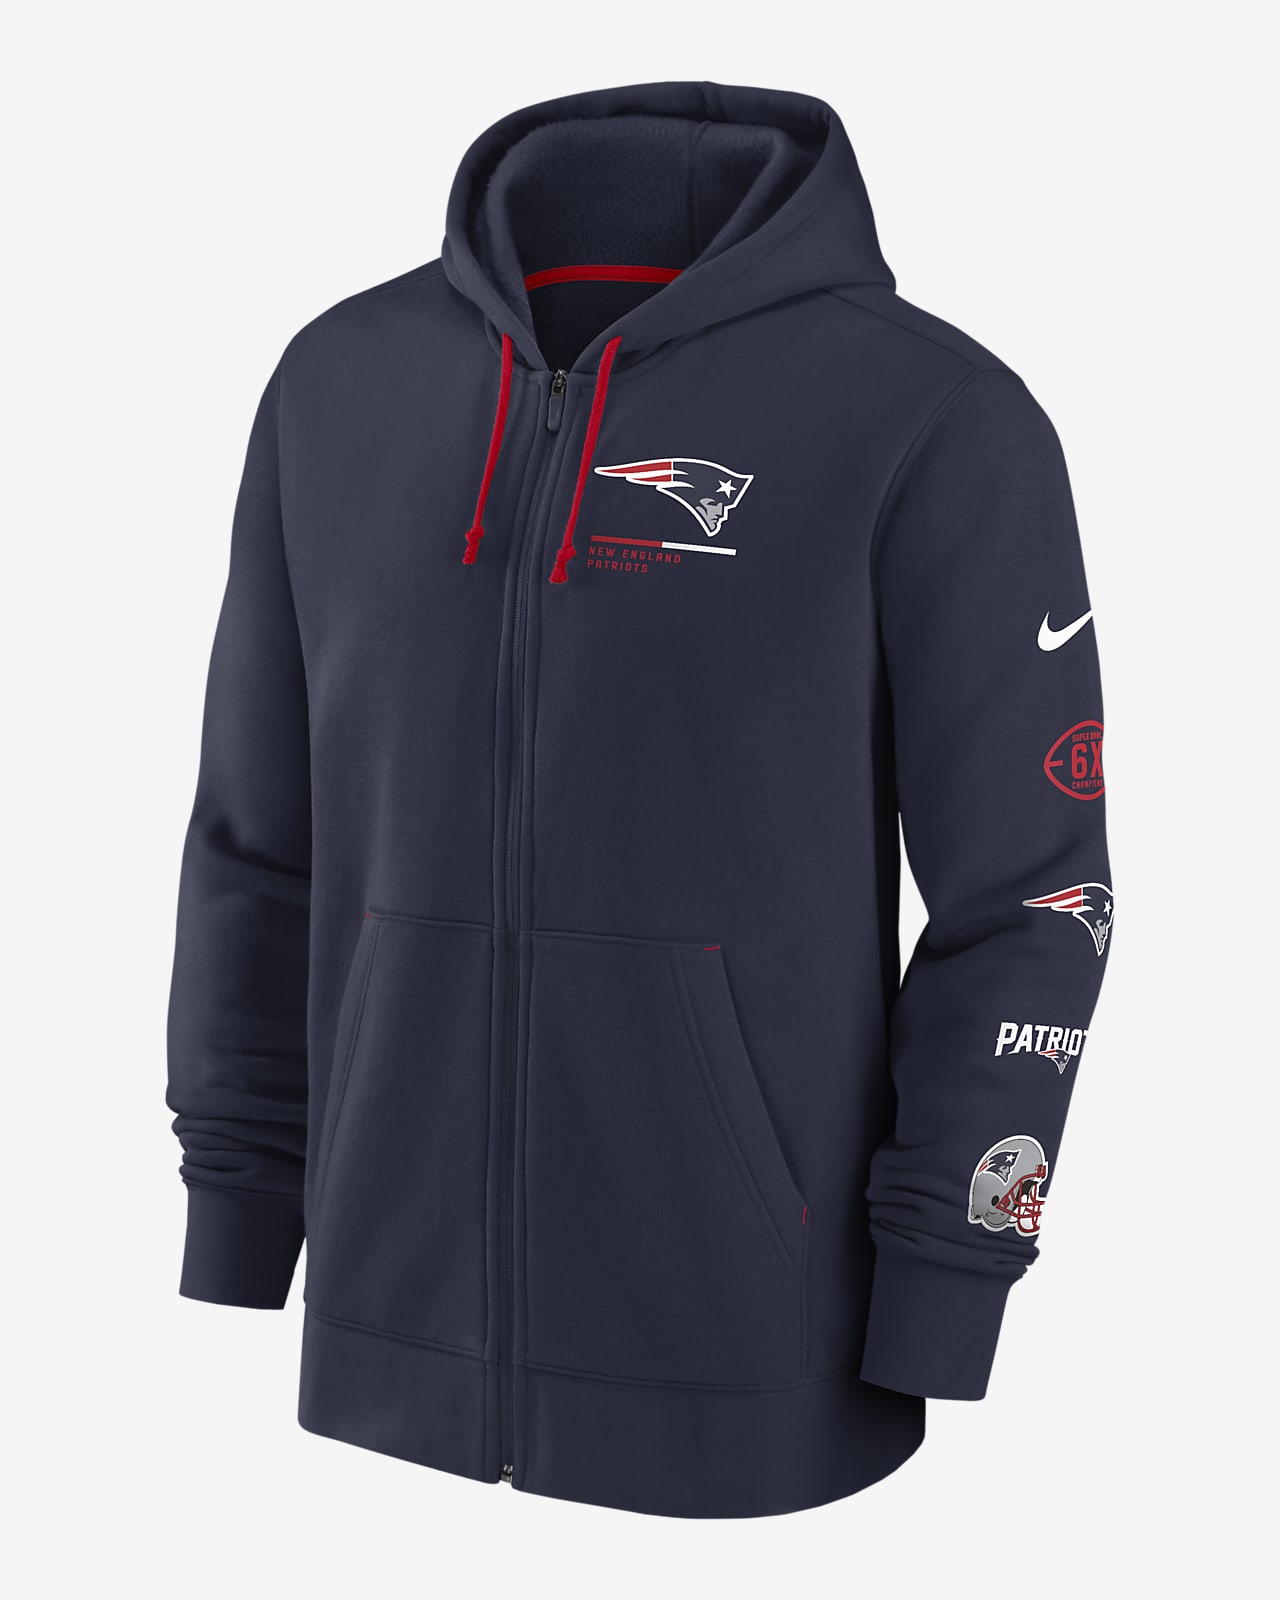 Nike Team Surrey (NFL New England Patriots) Men's Full-Zip Hoodie